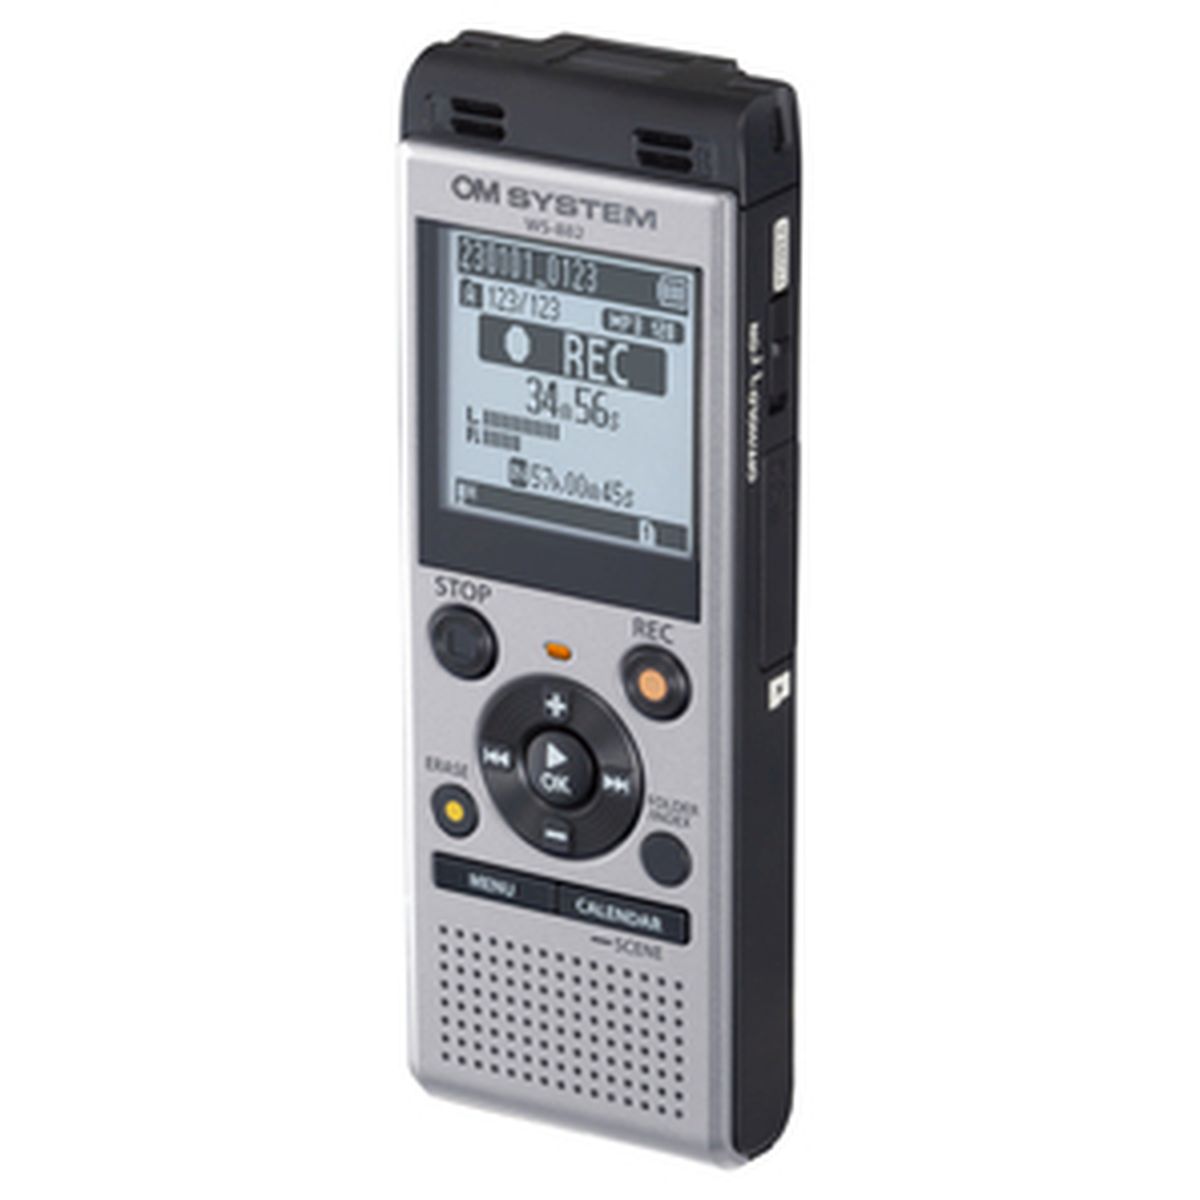 OM System WS-882 (4 GB) Multifunktions-Stereorekorder Silber